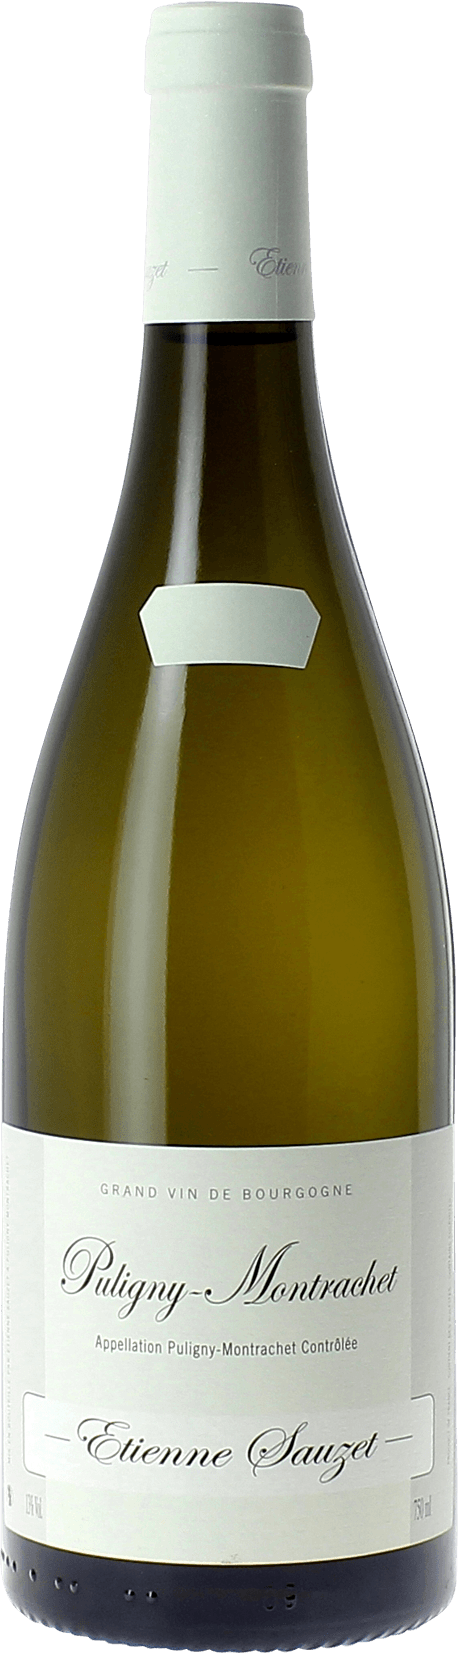 Puligny montrachet 2016 Domaine SAUZET, Bourgogne blanc